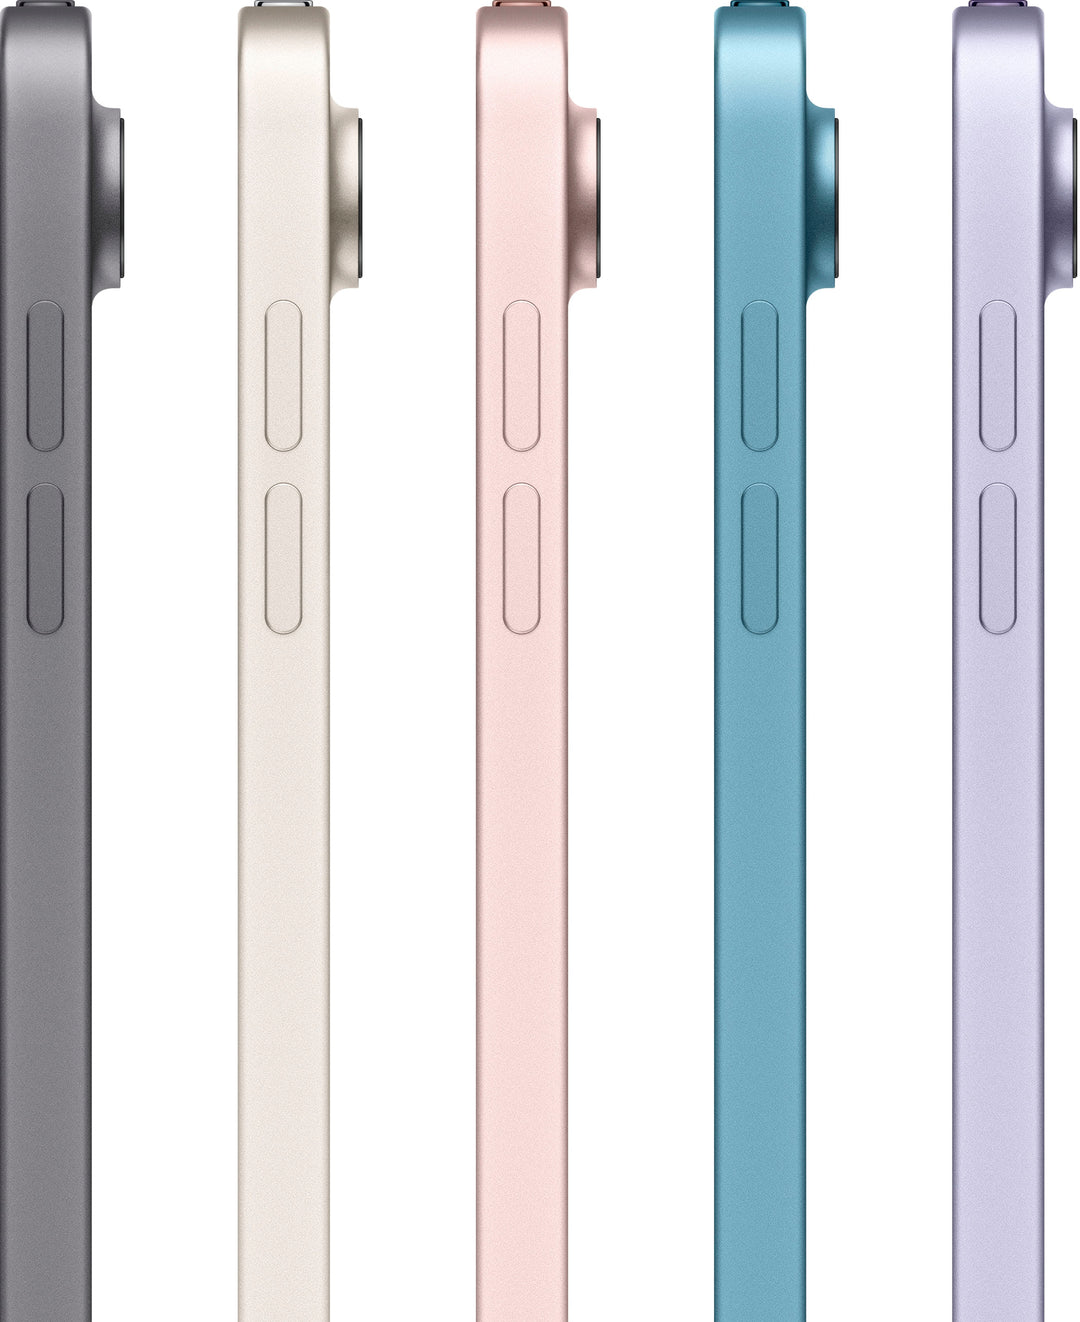 Apple - 10.9-Inch iPad Air - Latest Model - (5th Generation) with Wi-Fi - 64GB - Blue_7